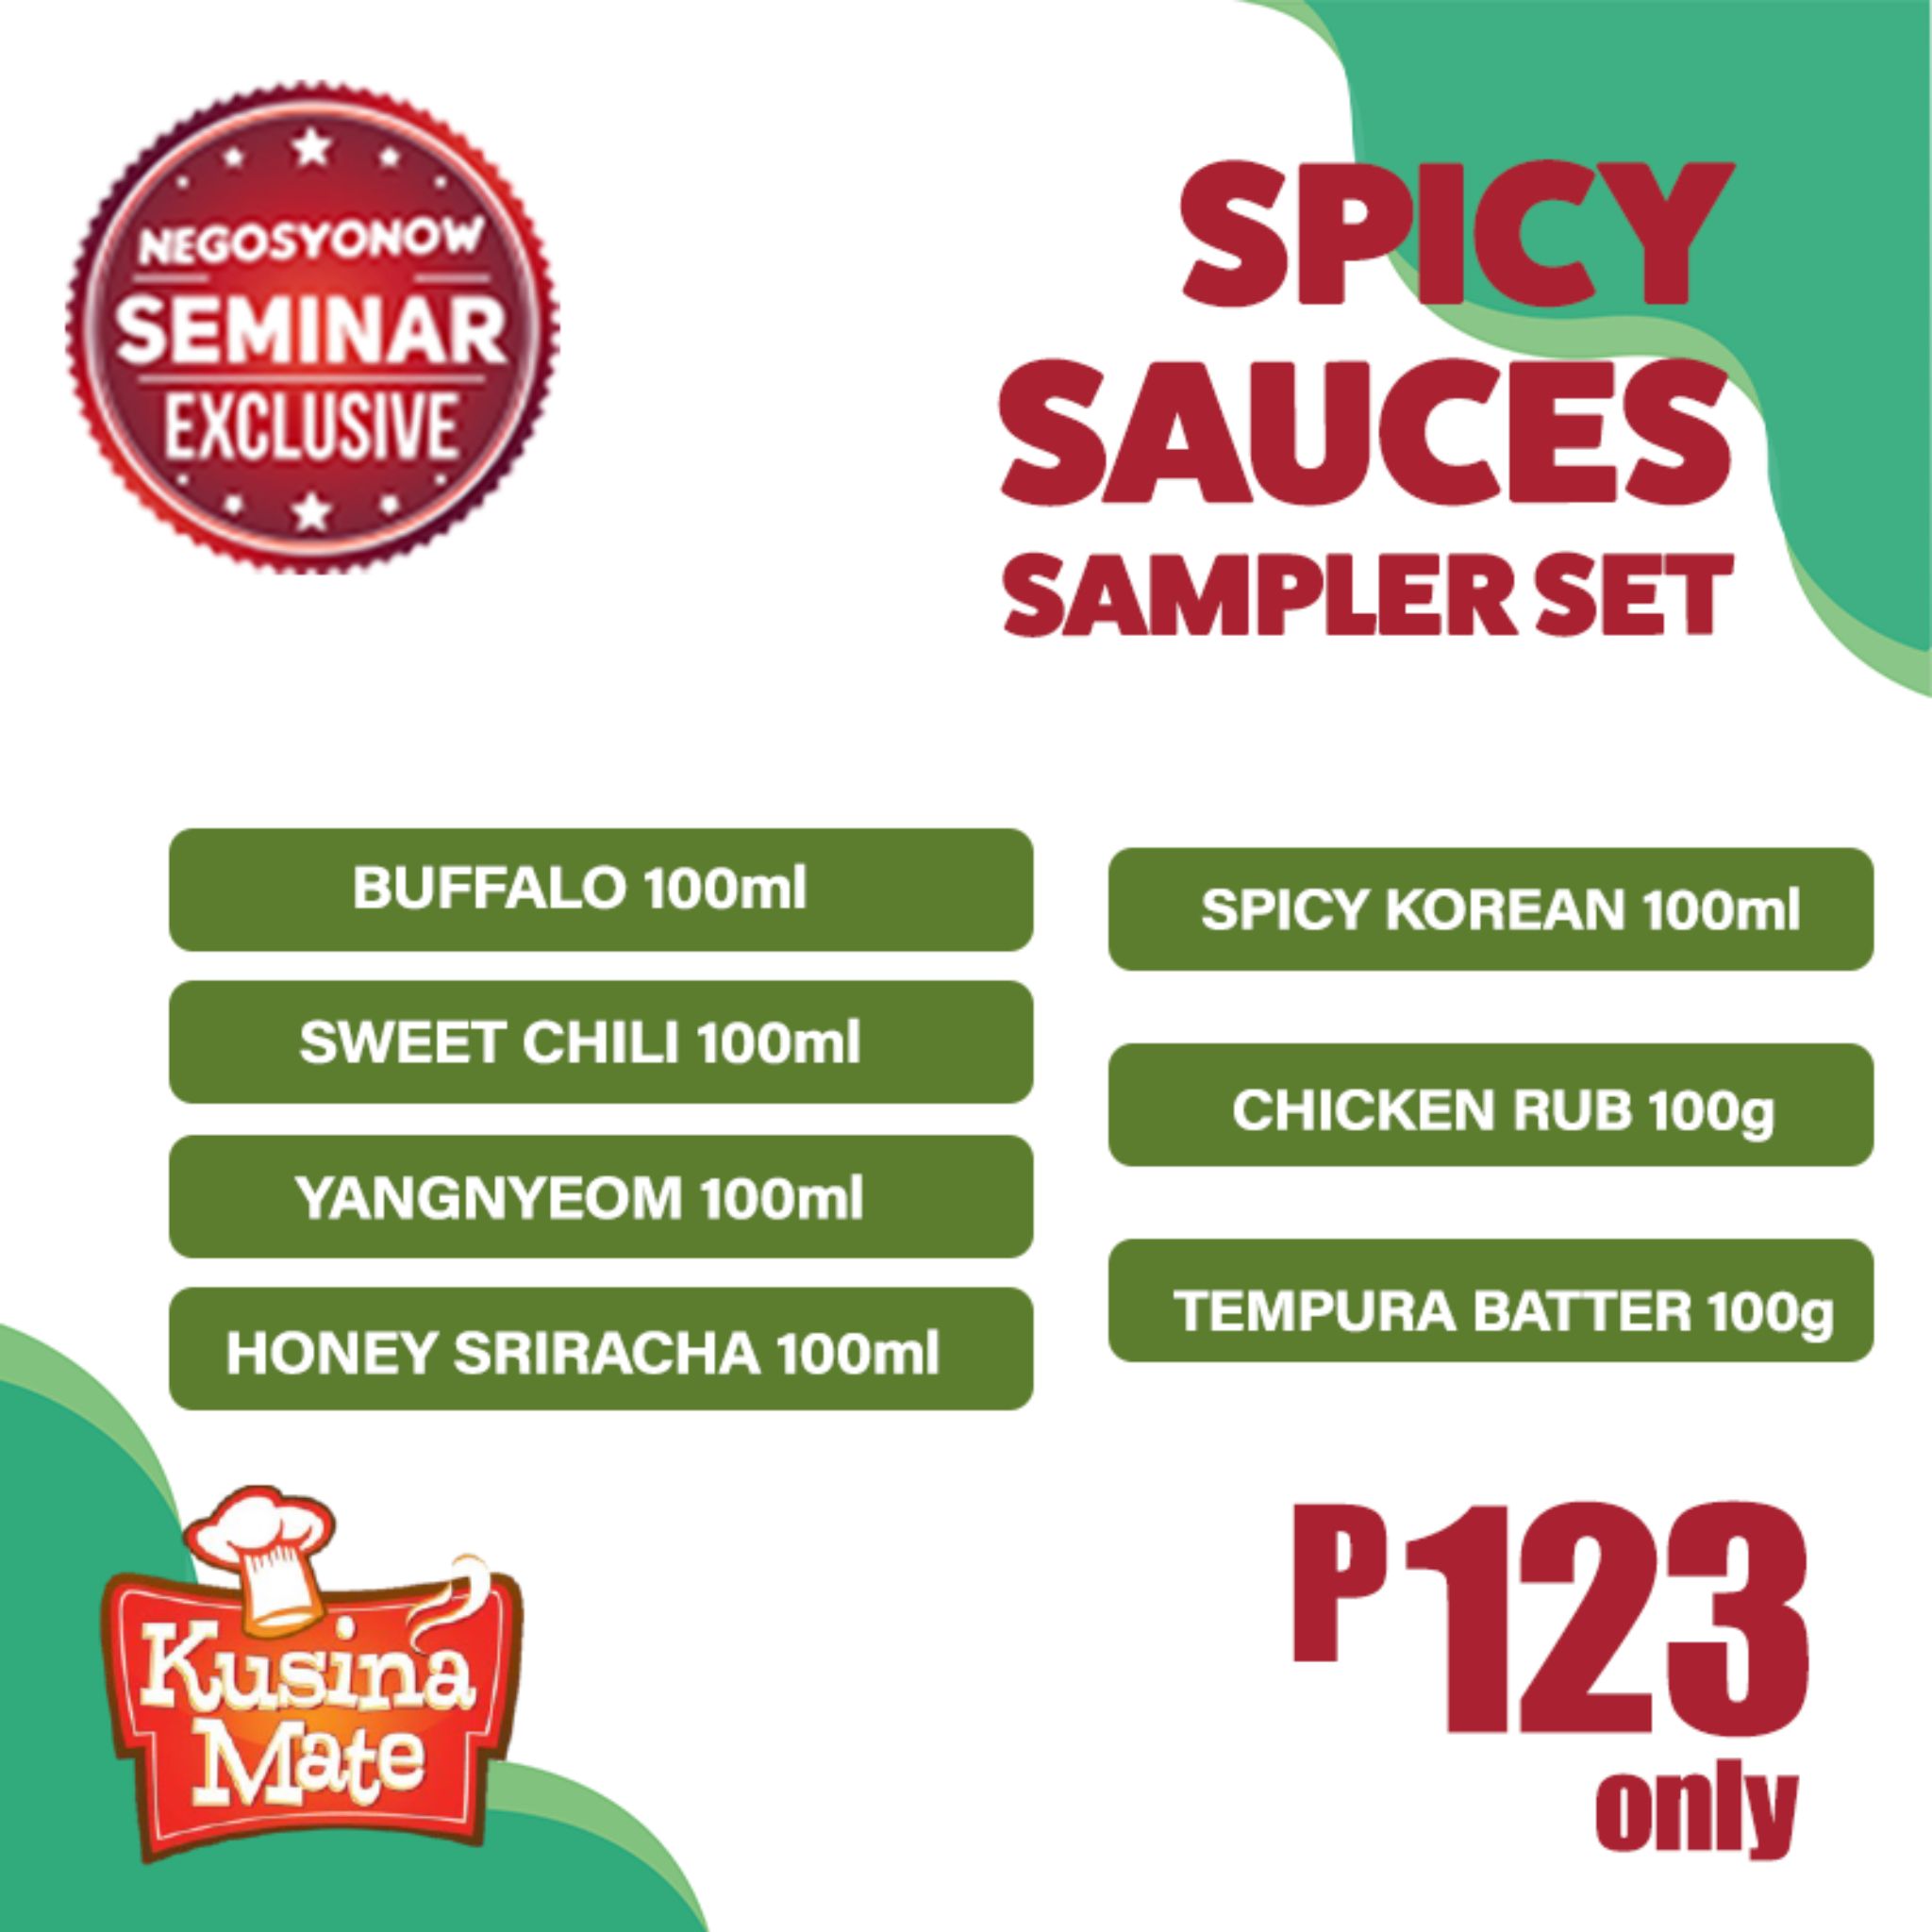 Spicy Sauce Sampler Set